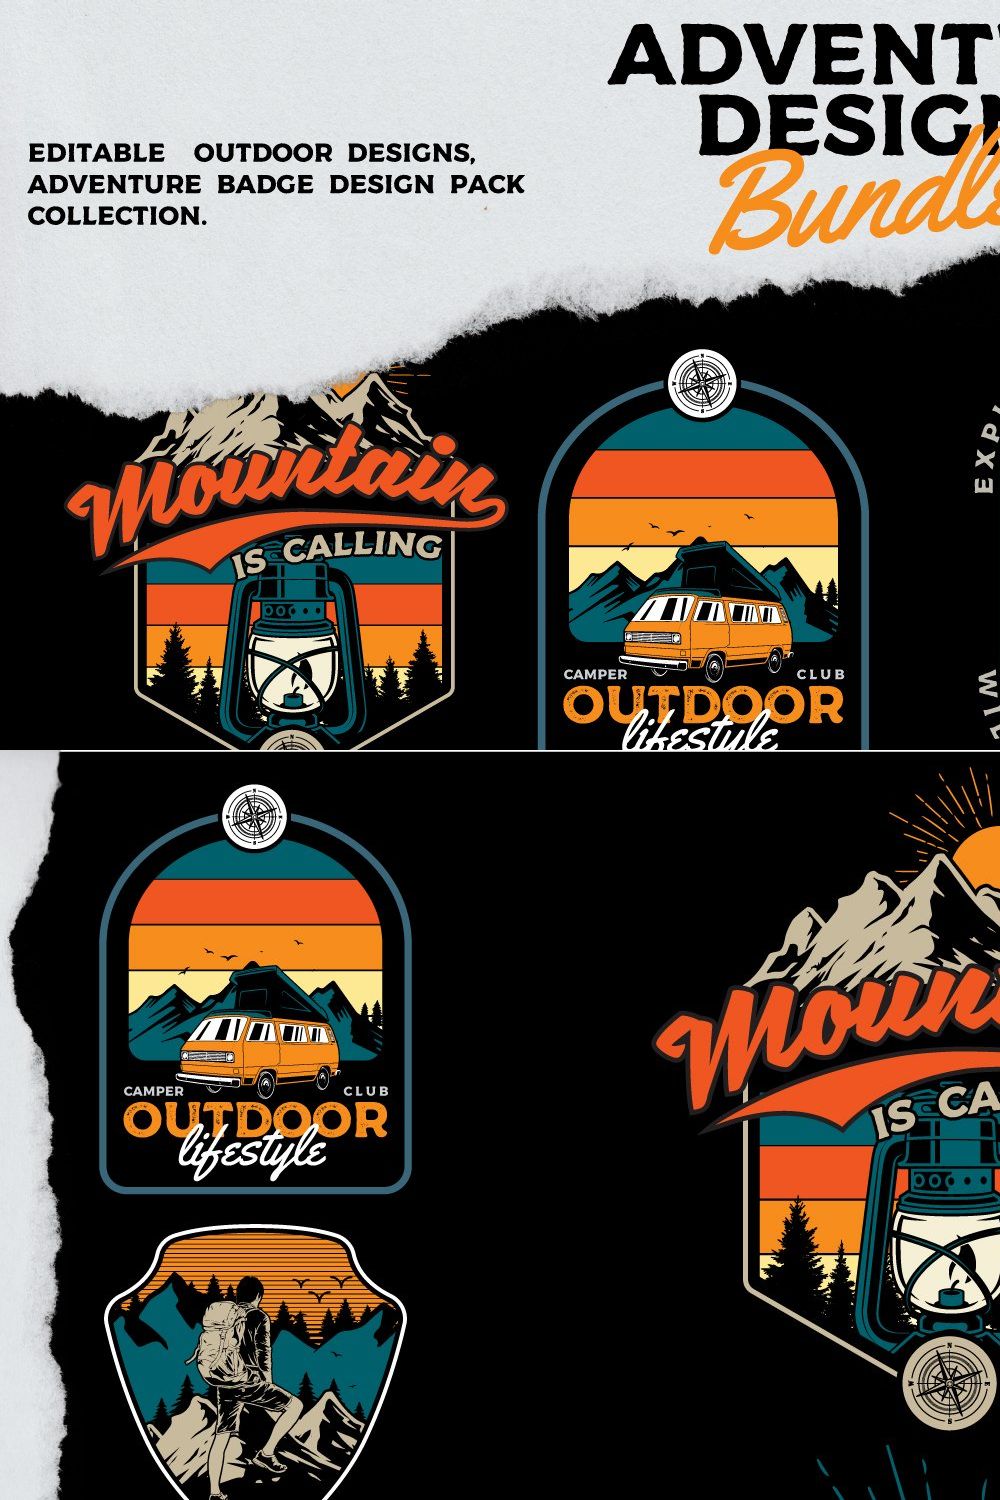 Adventure outdoor designs bundles, pinterest preview image.